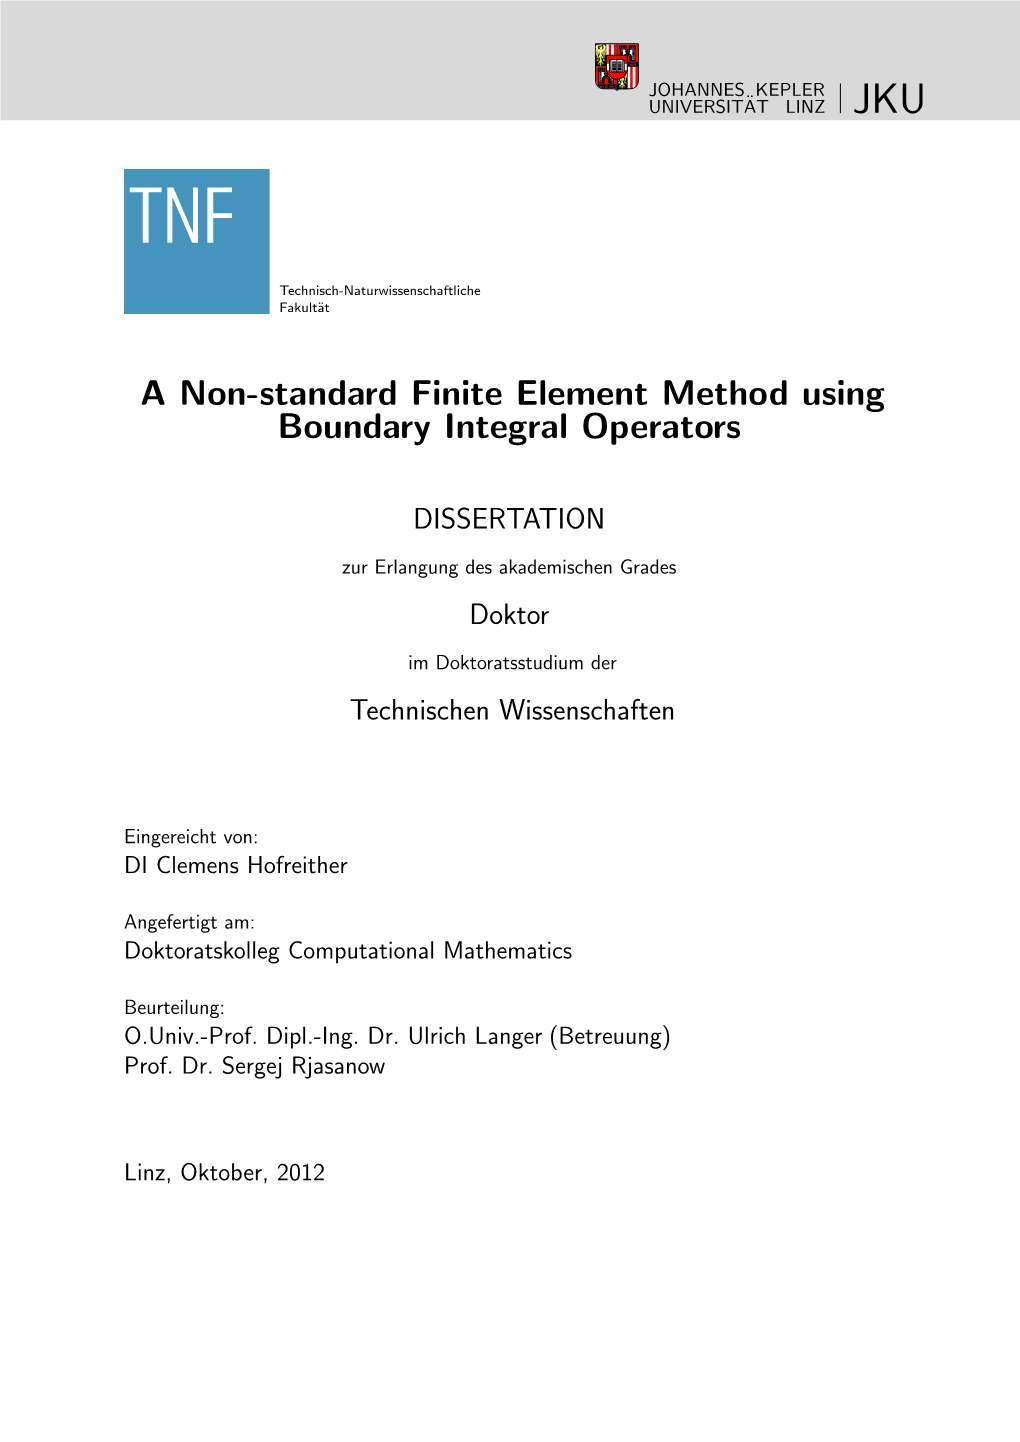 A Non-Standard Finite Element Method Using Boundary Integral Operators